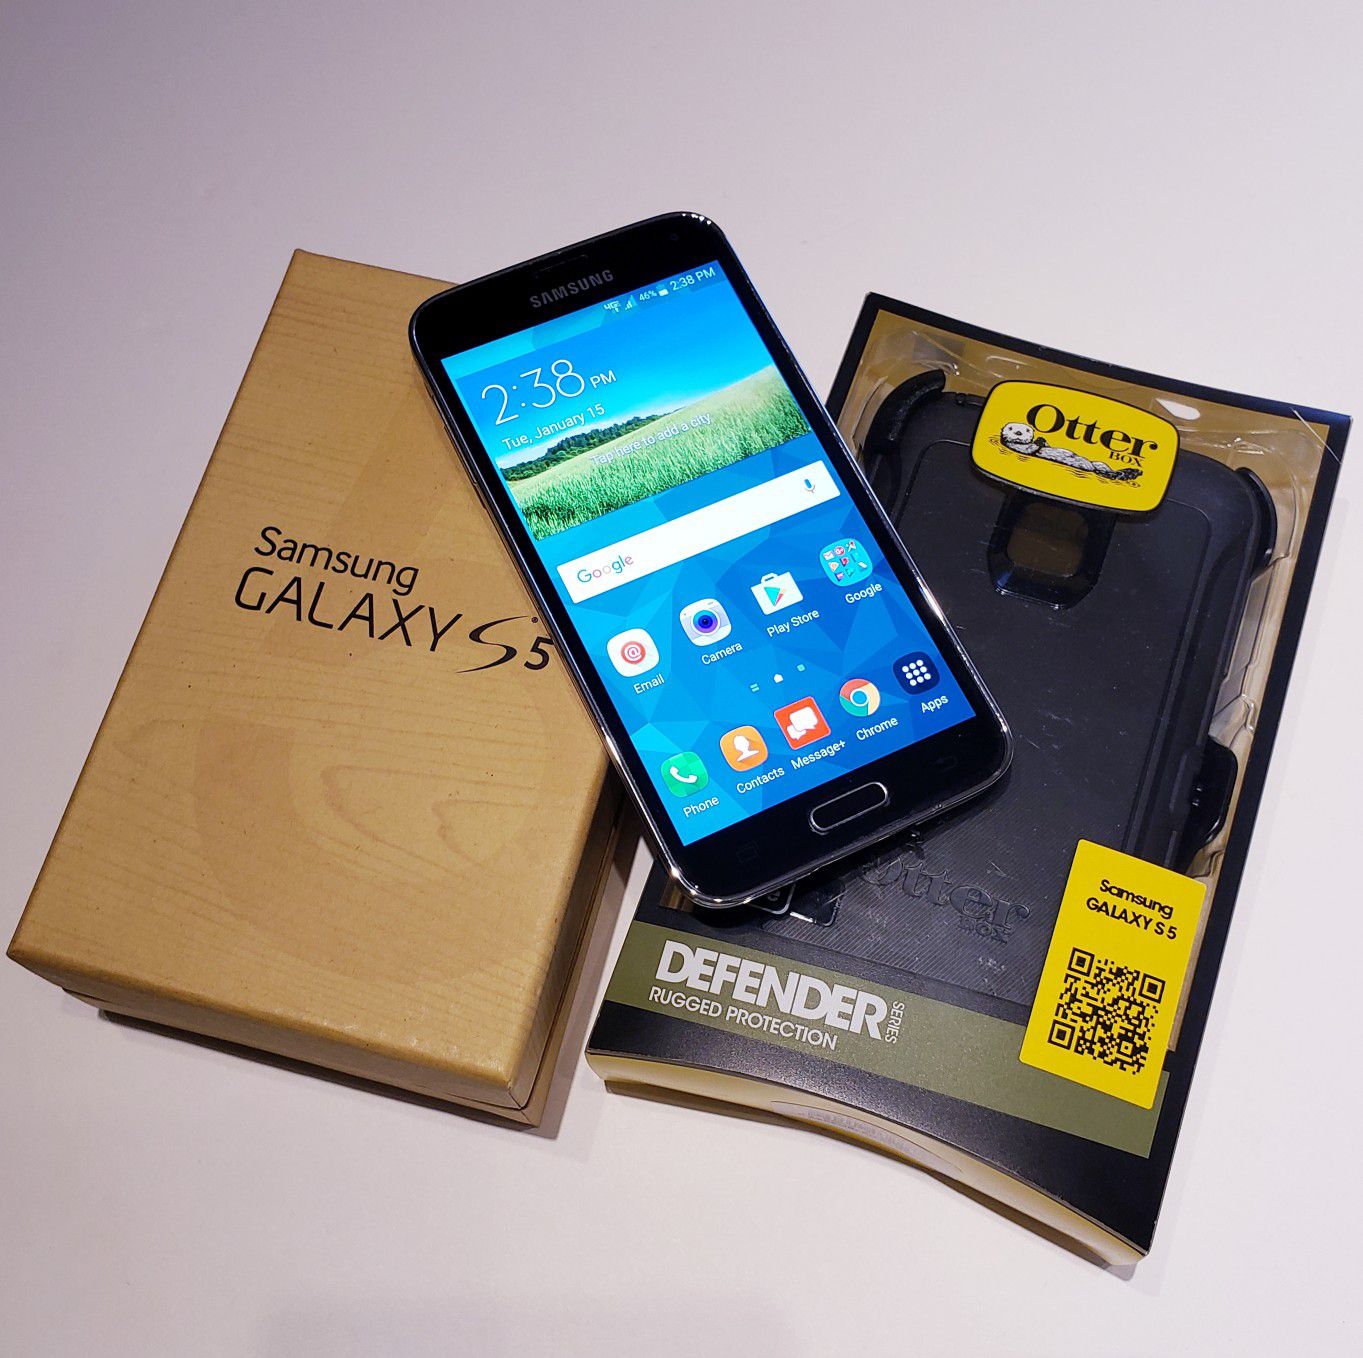 Samsung Galaxy S5 - Unlocked - w/Otterbox Defender Series Case